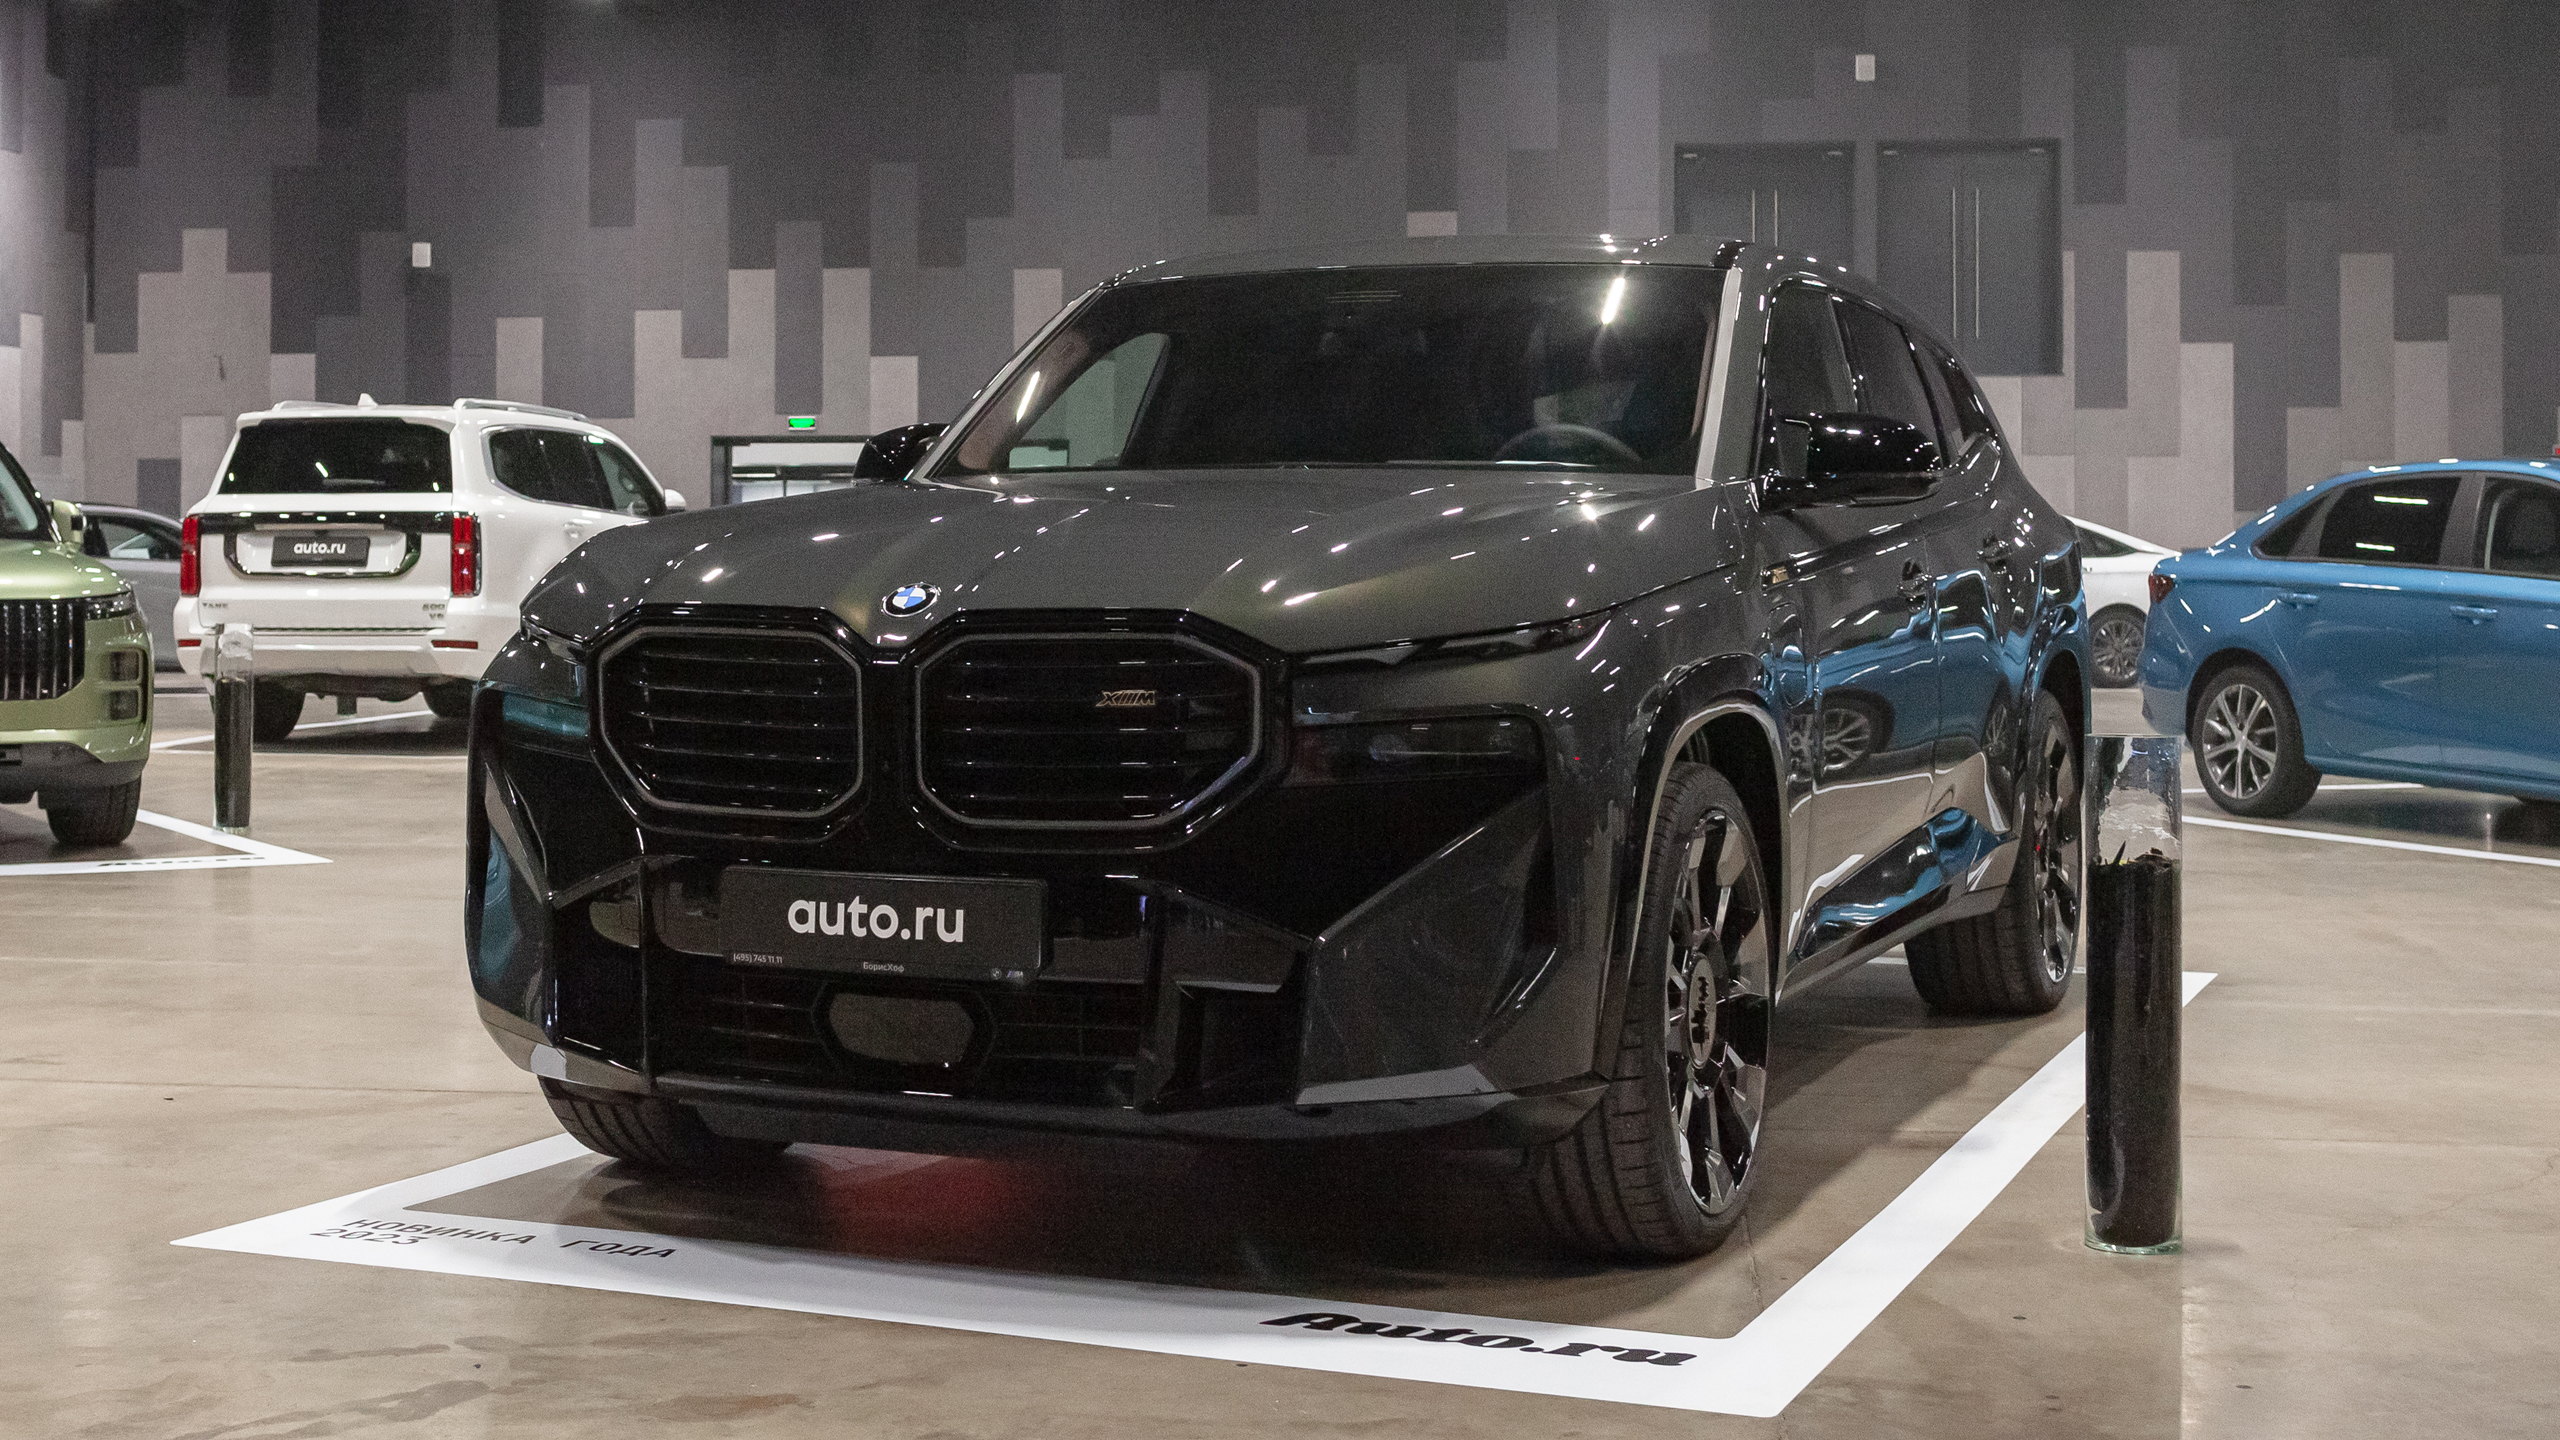 BMW XM на презентации «Новинка года Авто.ру» 2023